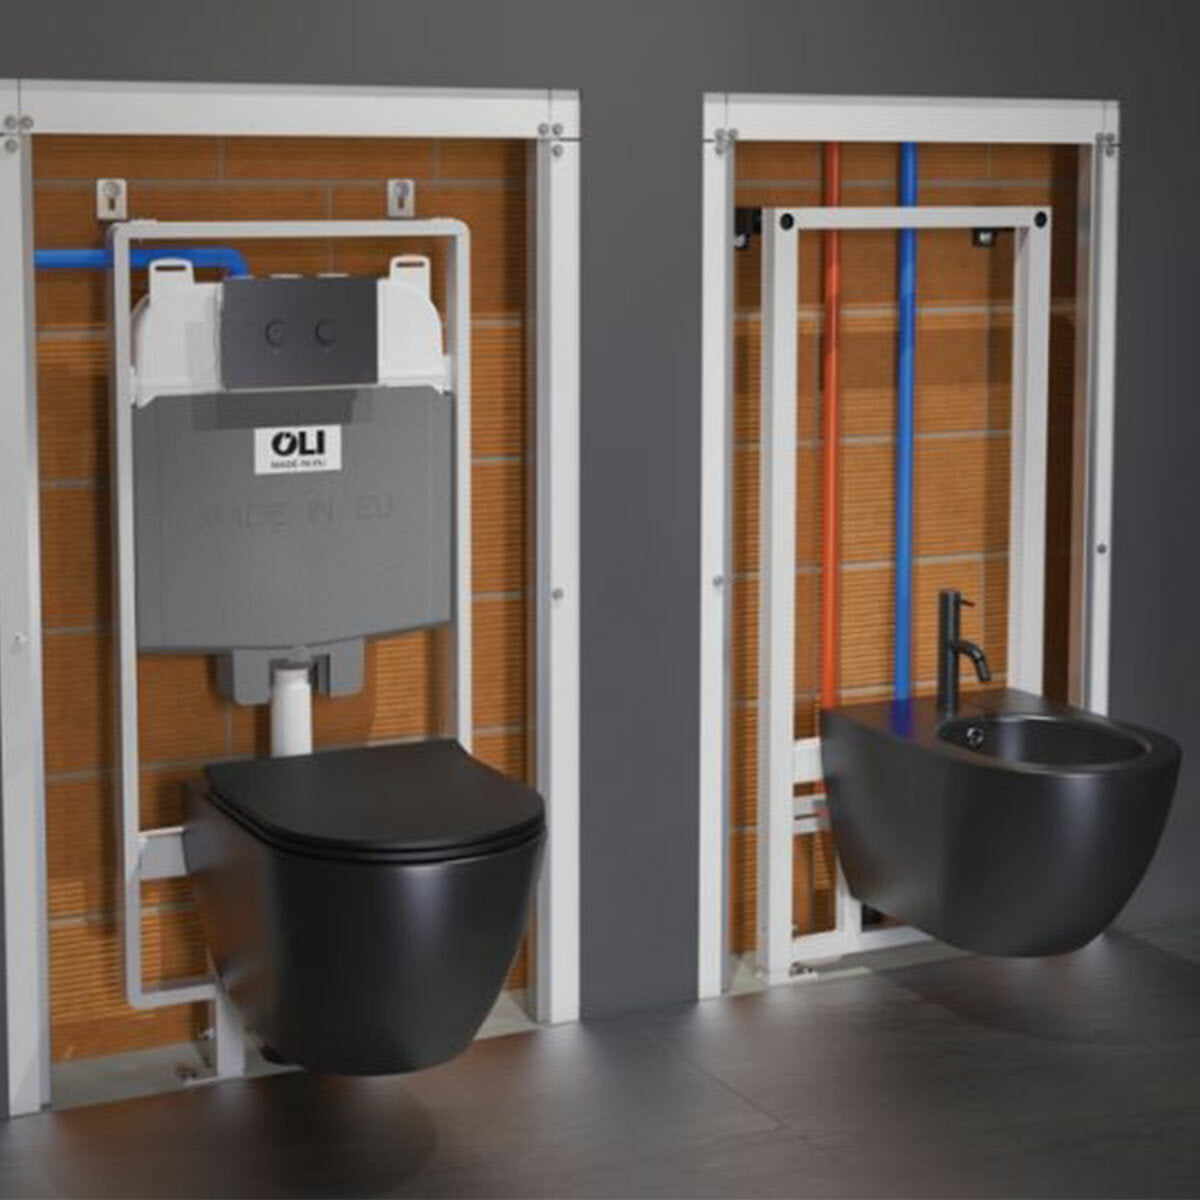 OLI OLI74 PLUS S80 SANITARBLOCK built-in flush cistern for wall-hung sanitary ware